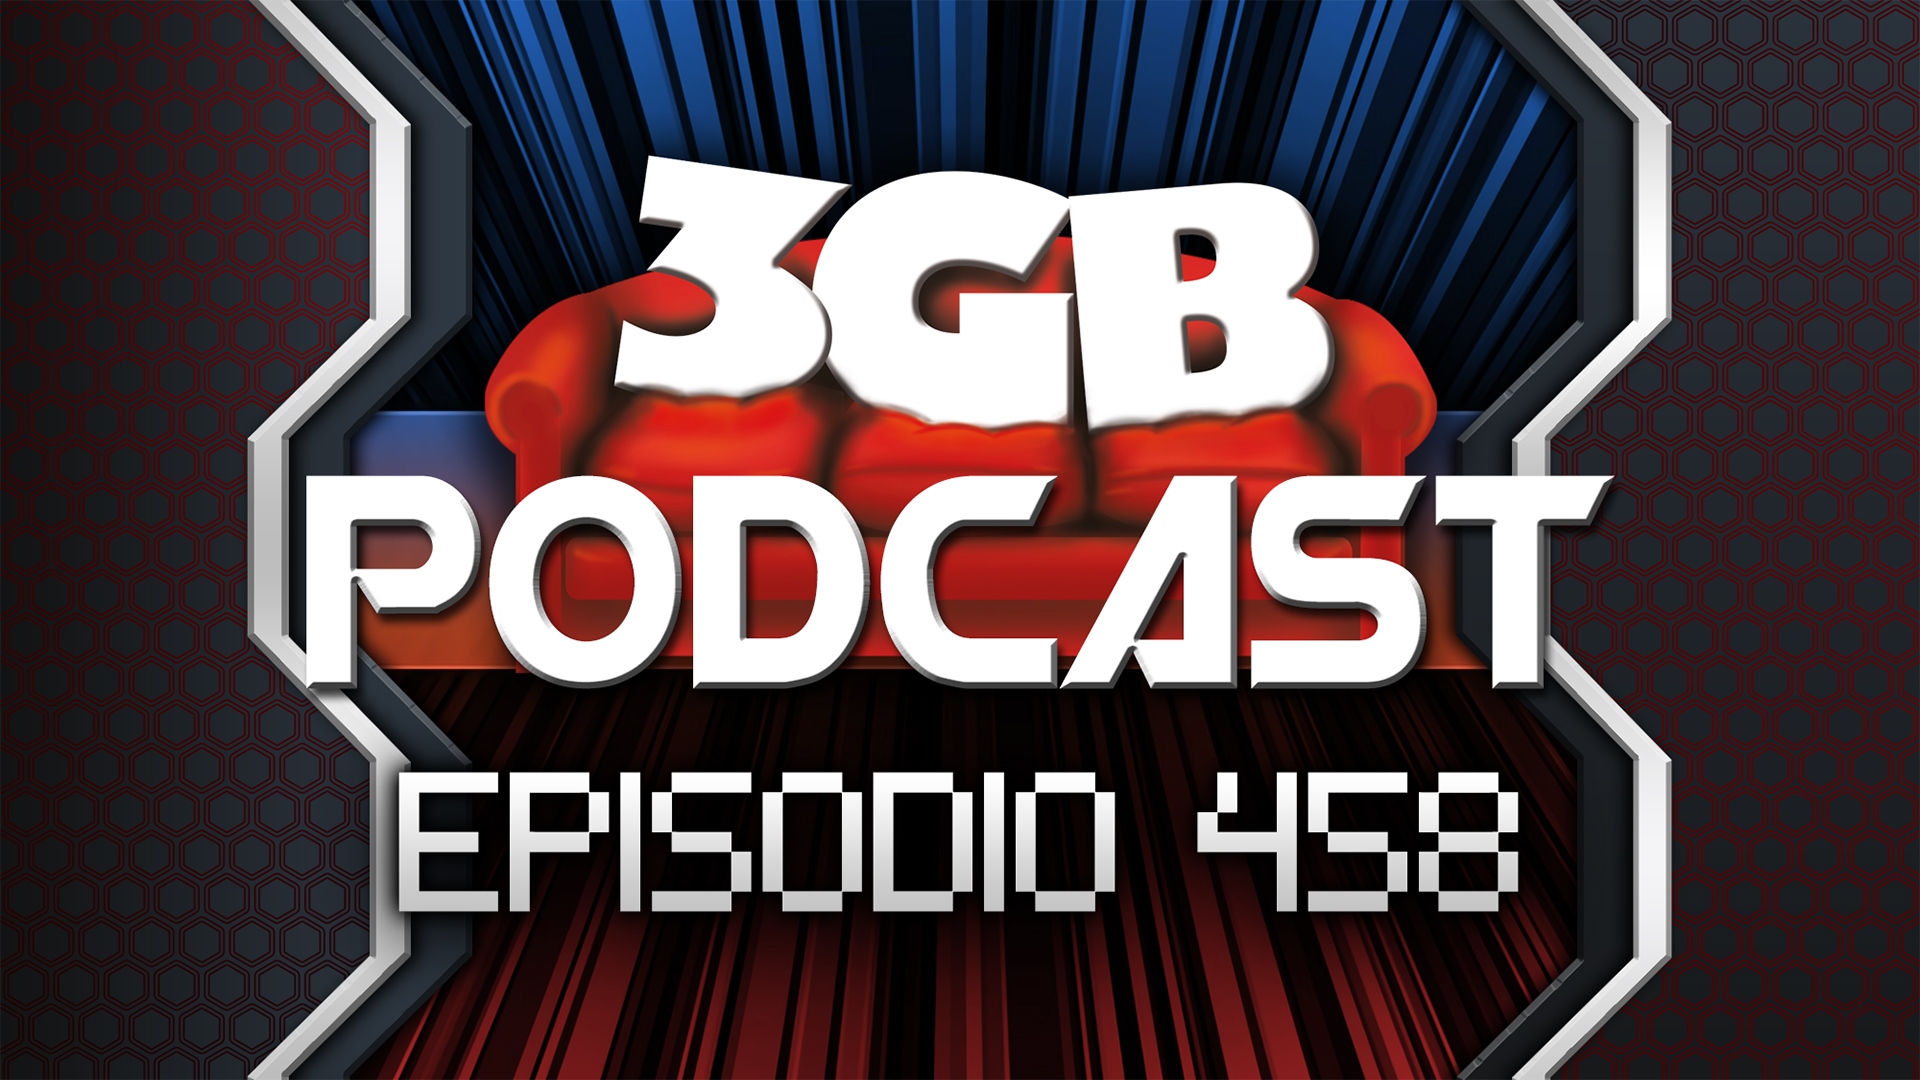 Podcast: Episodio 458, Nunca escuché hablar de él